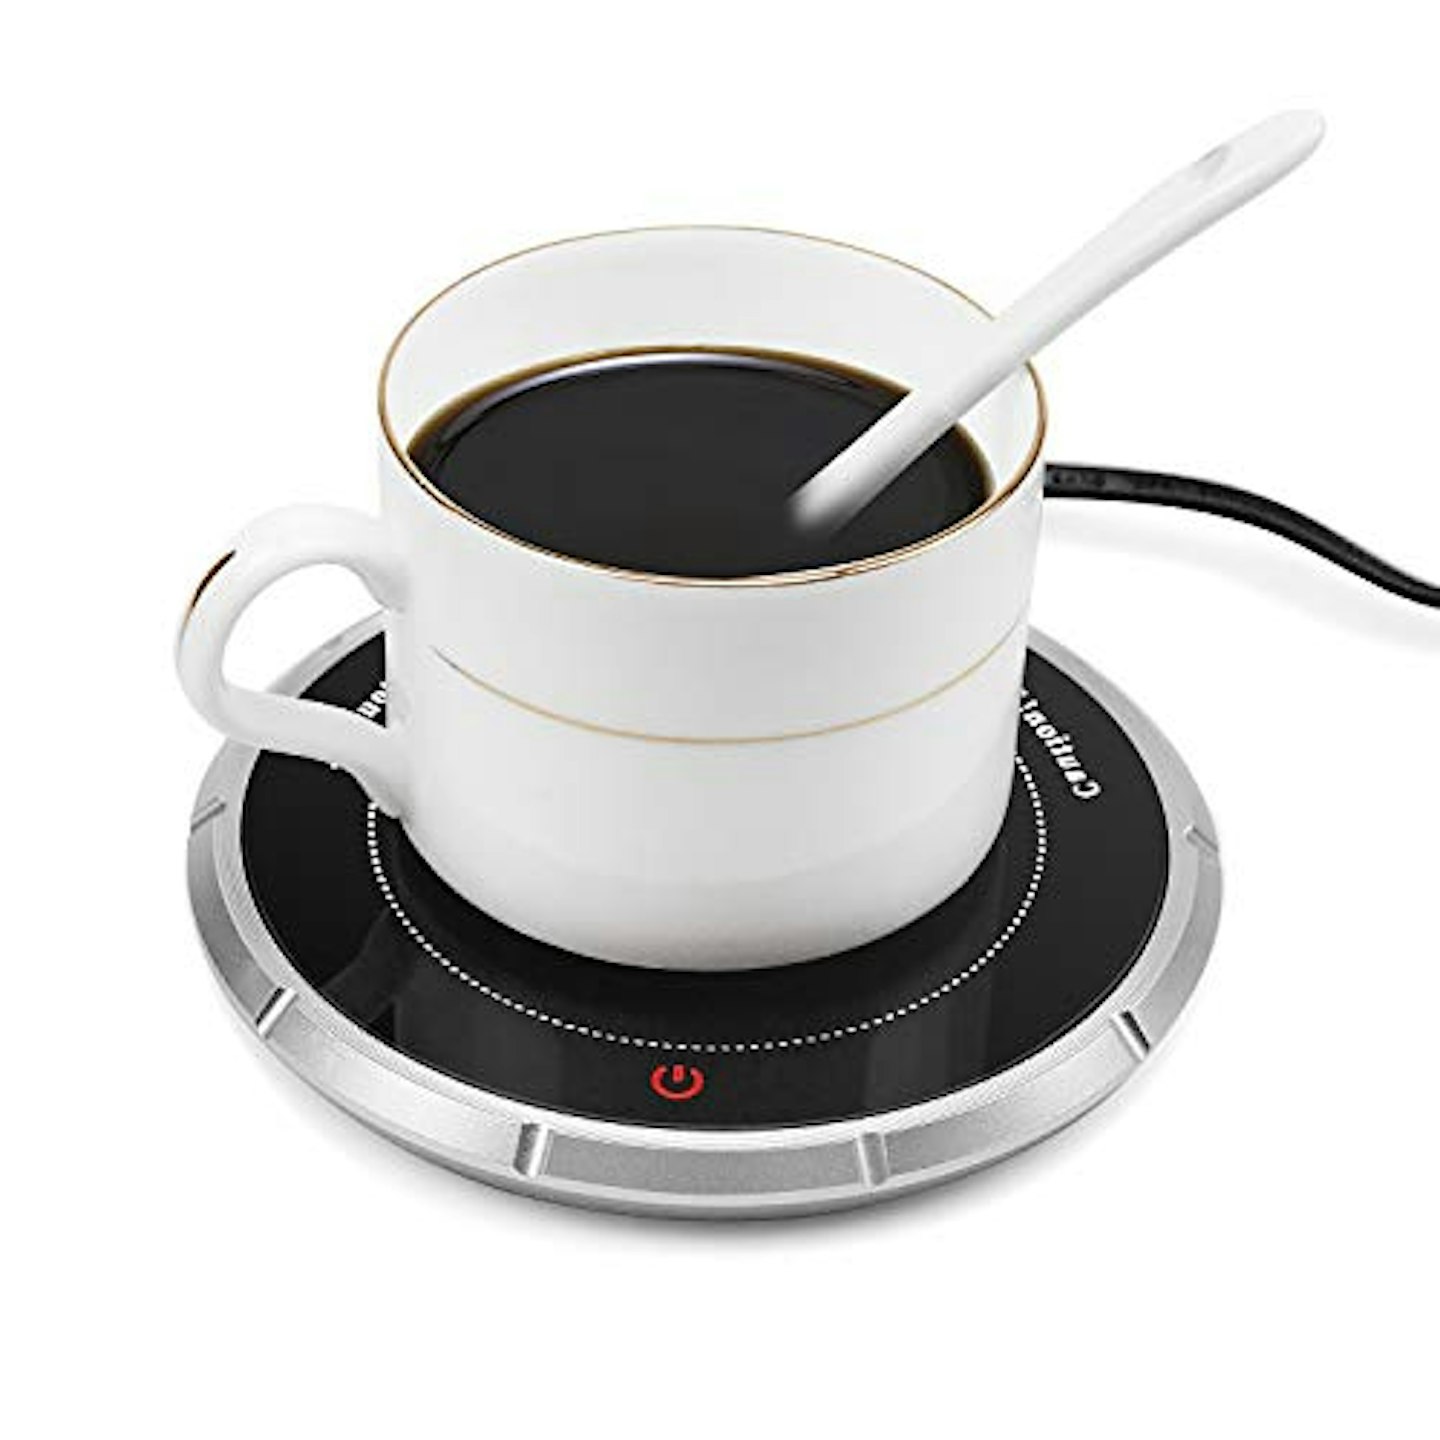 GARMEE Electric Coffee Warmer, Smart Coffee Warmers for Office Desk, Mug  Warmer with 2 Temperature Settings, Cup Warmer Tea Warmer, Electric  Beverage